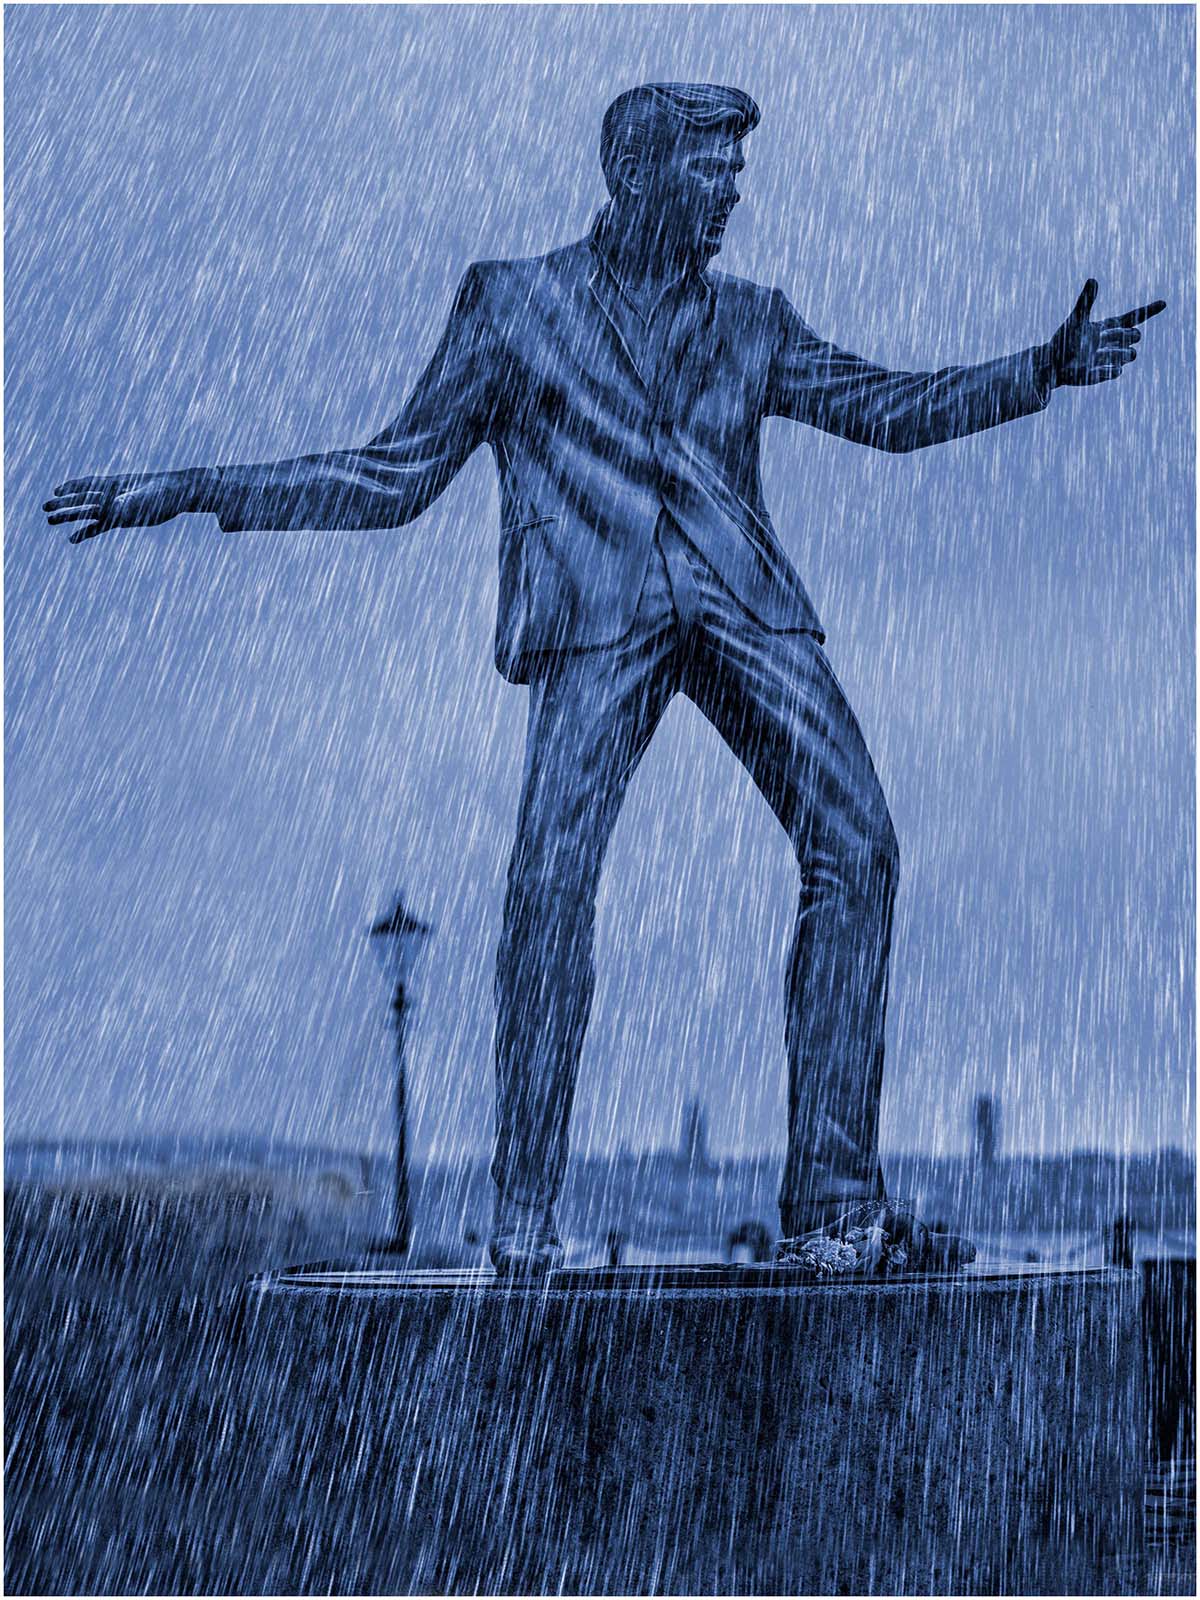 The-Fury-of-the-Rain.jpg